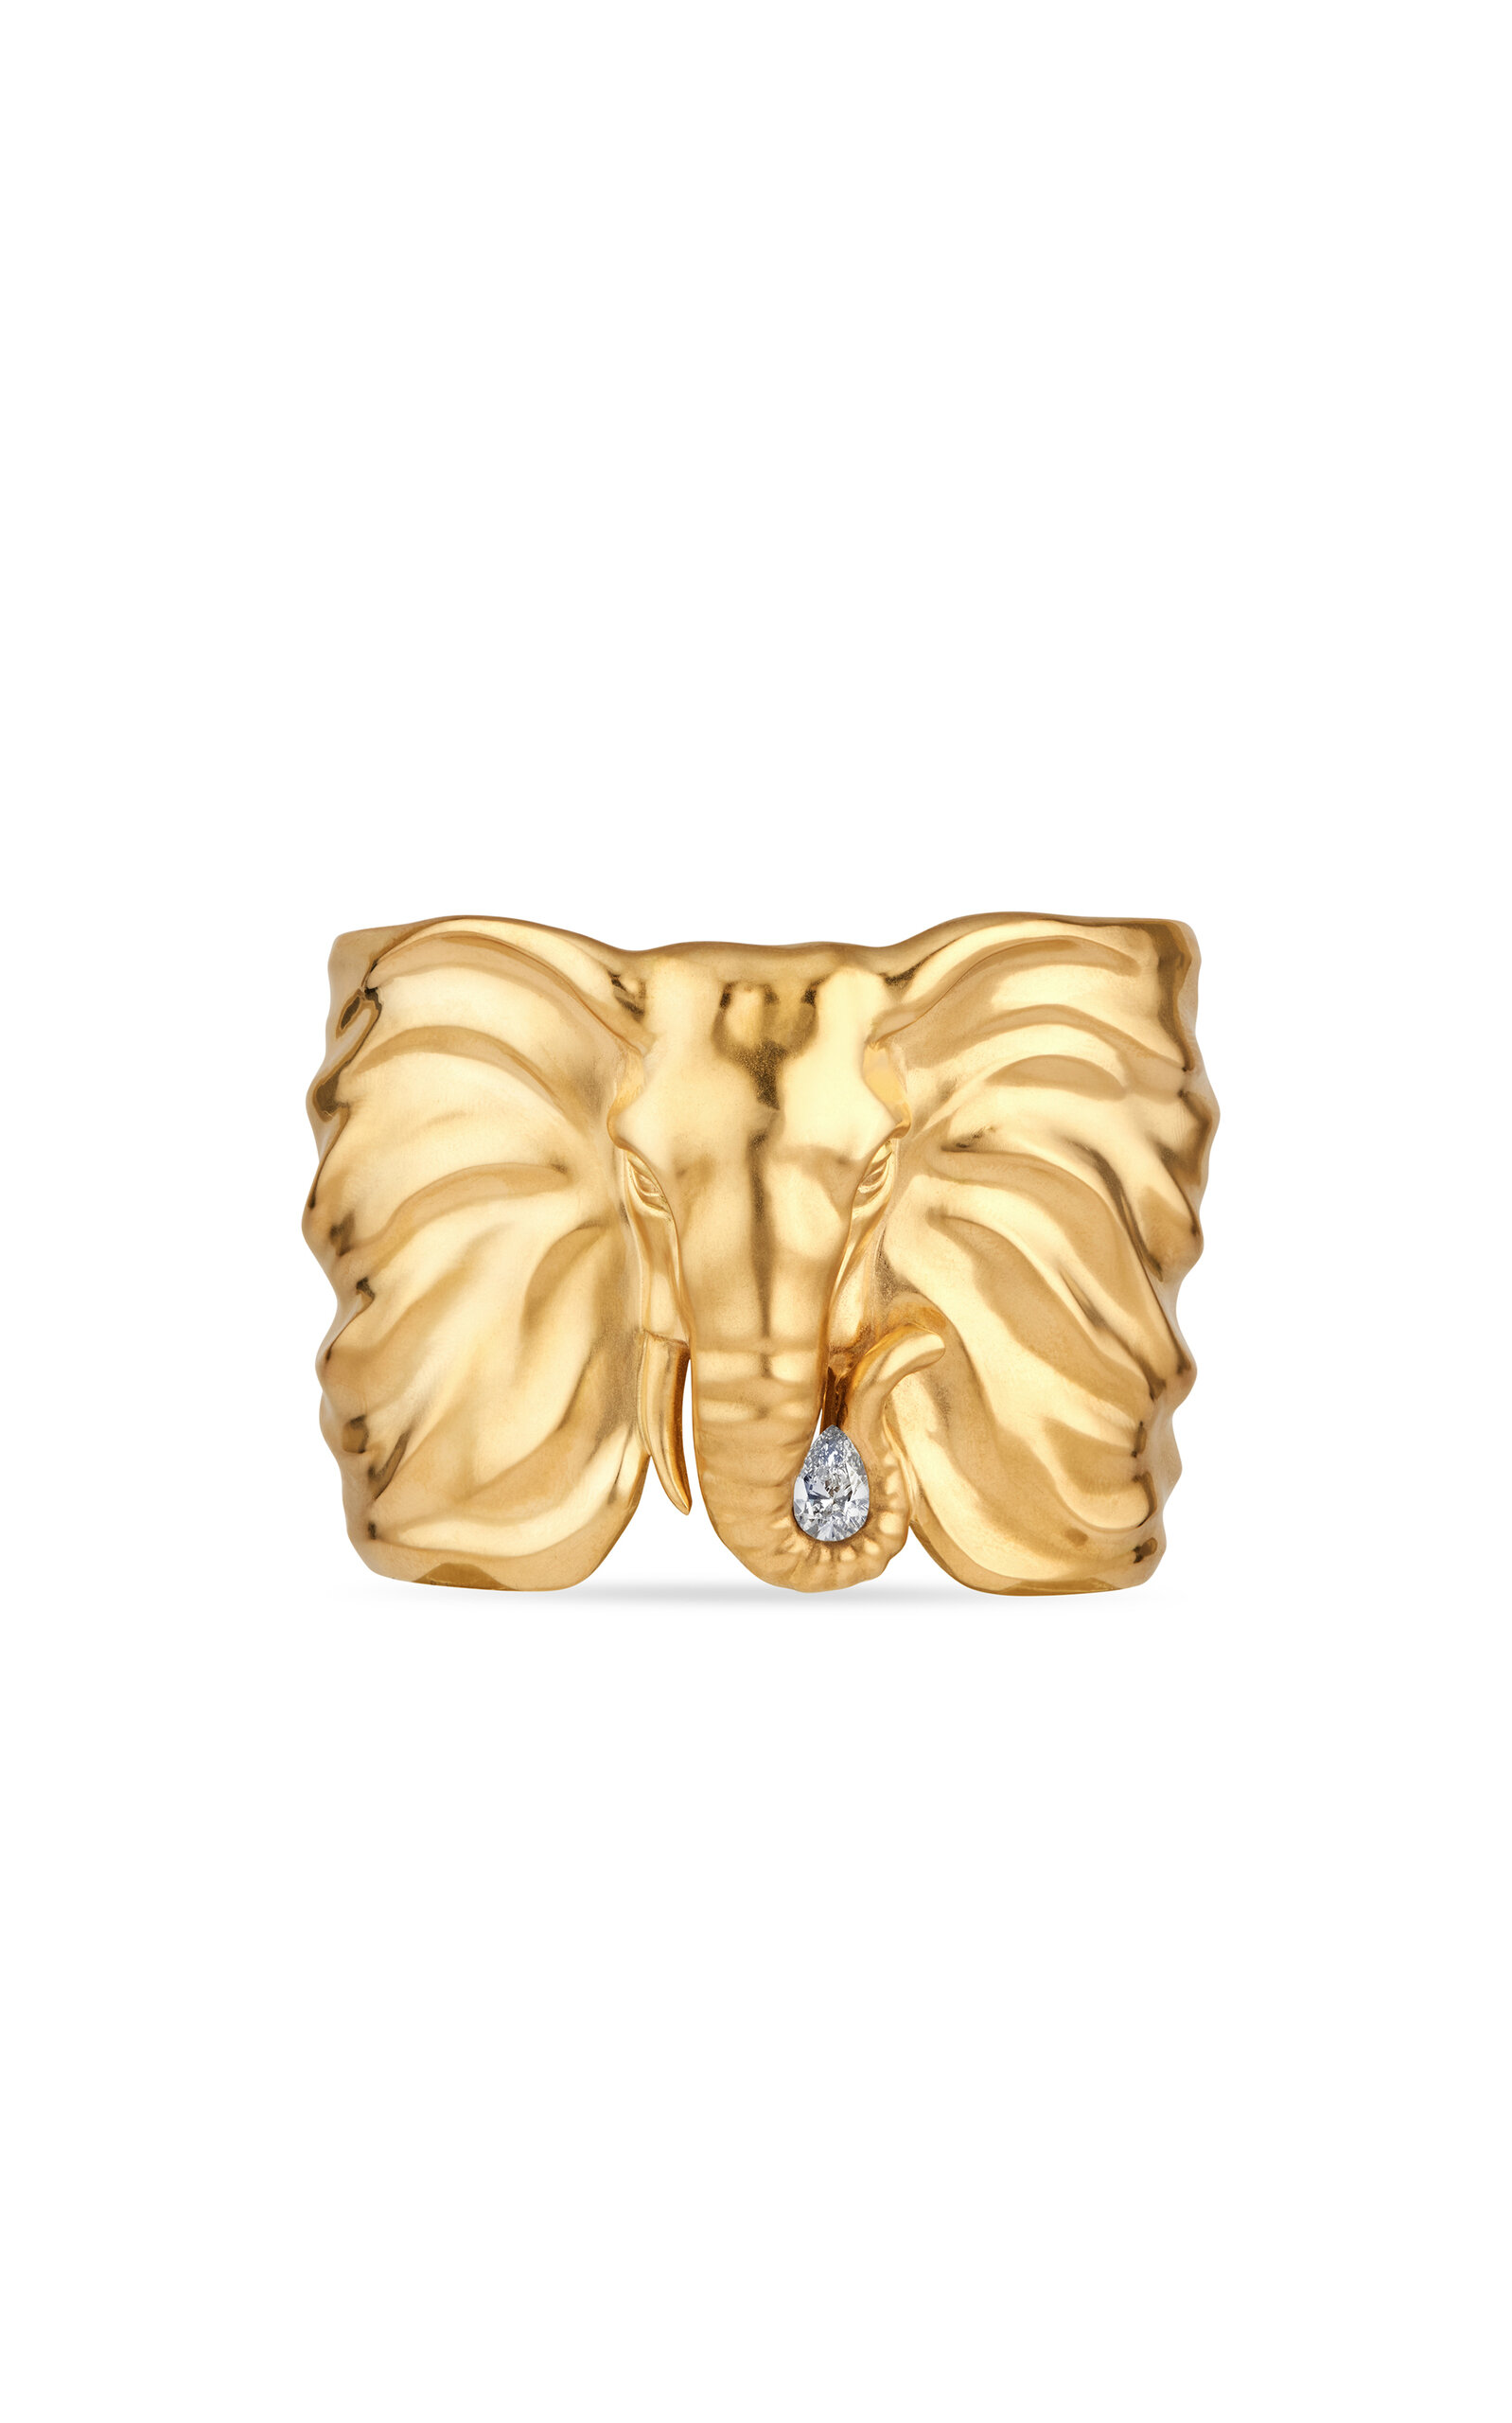 18k Recycled Yellow Gold Elephant Cuff Bracelet